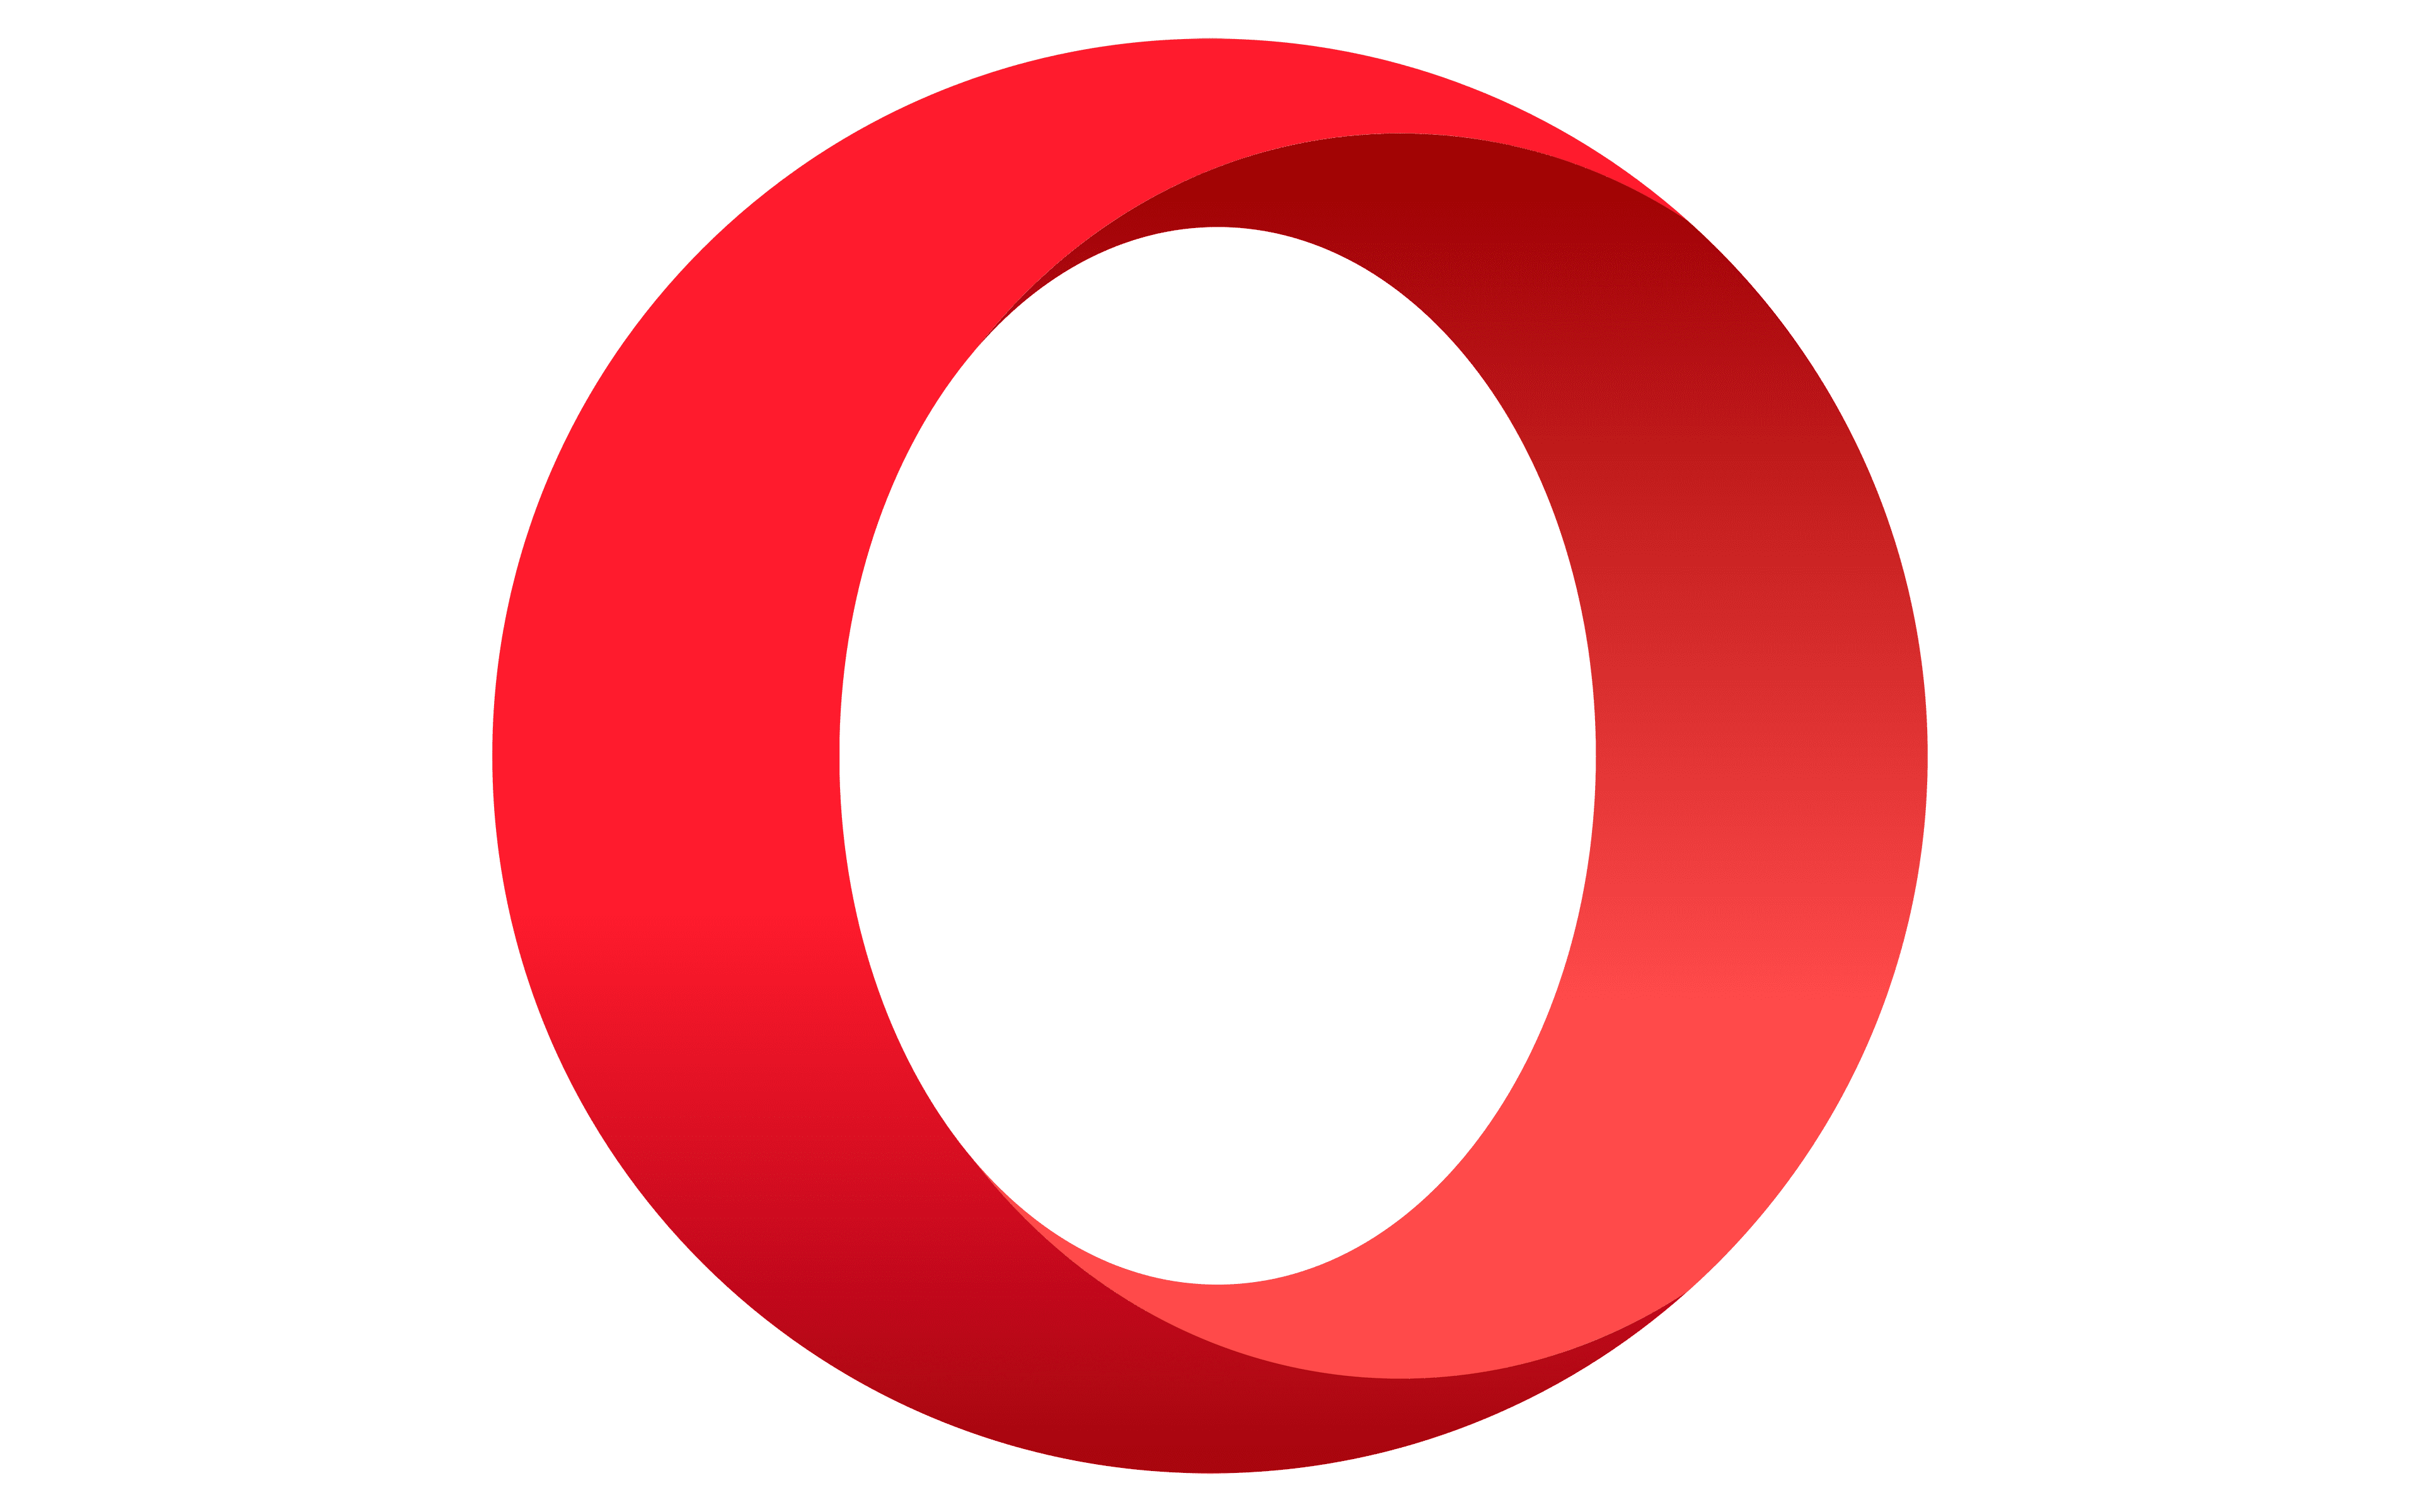 Opera-Logo